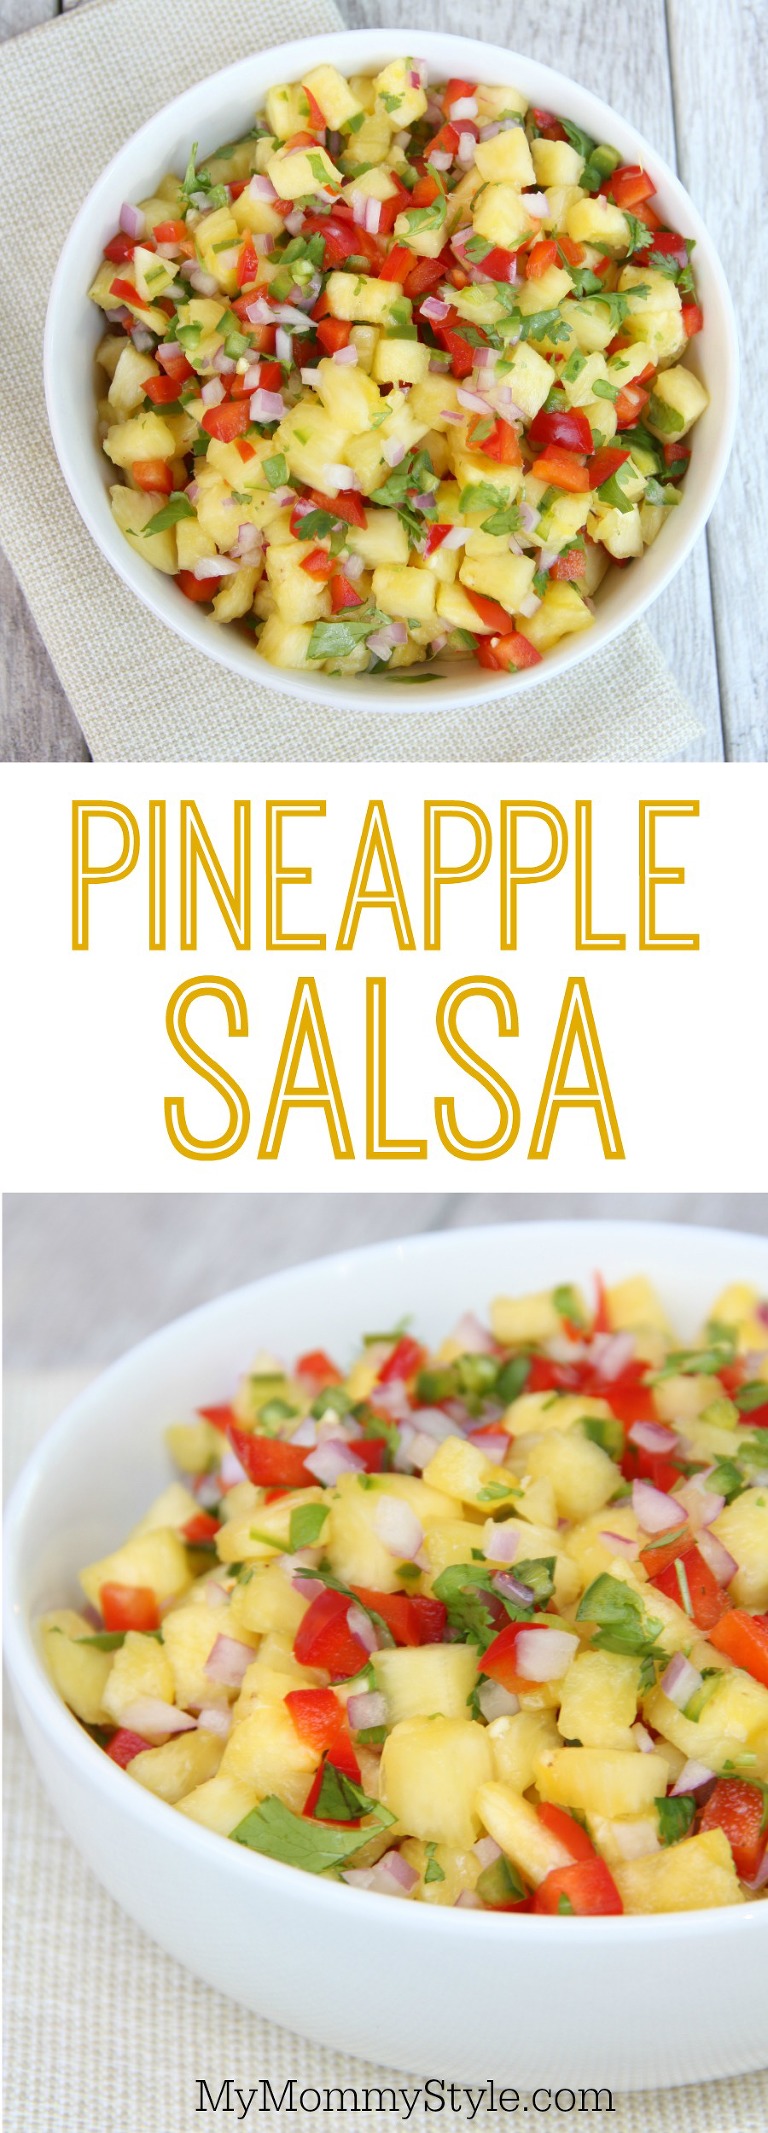 Easy Pineapple salsa